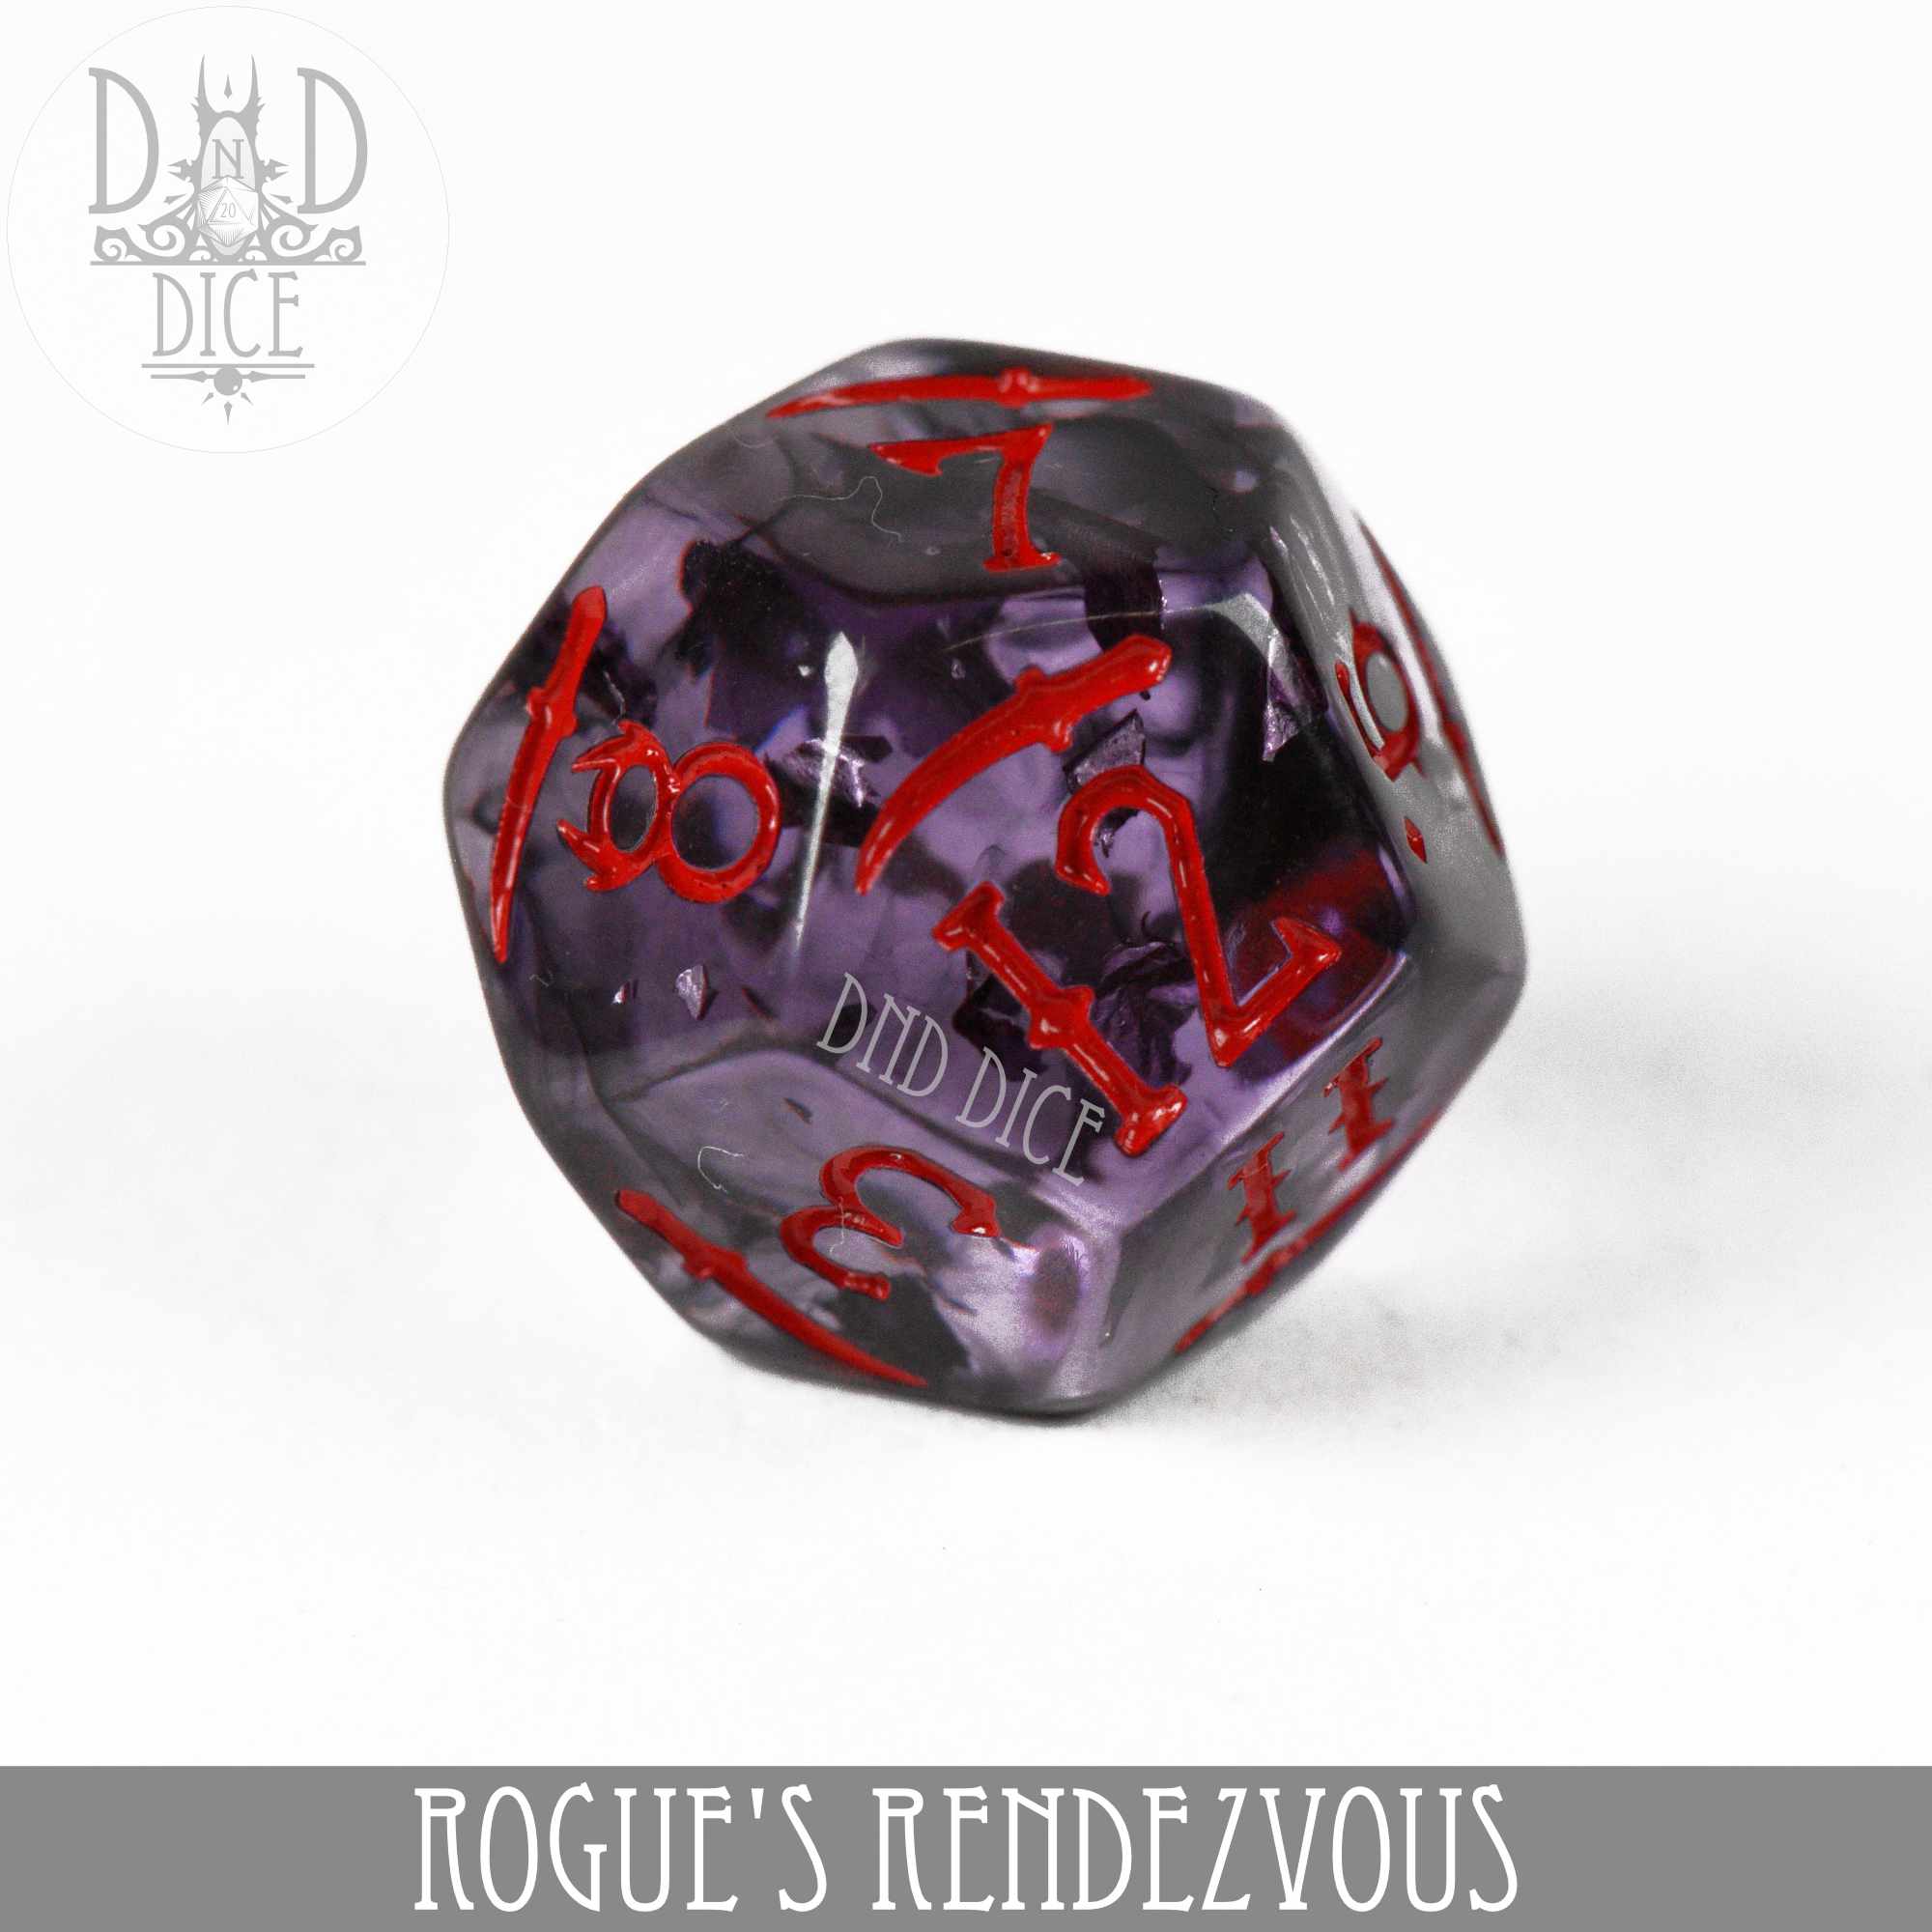 Rogue's Rendezvous 11 Dice Set